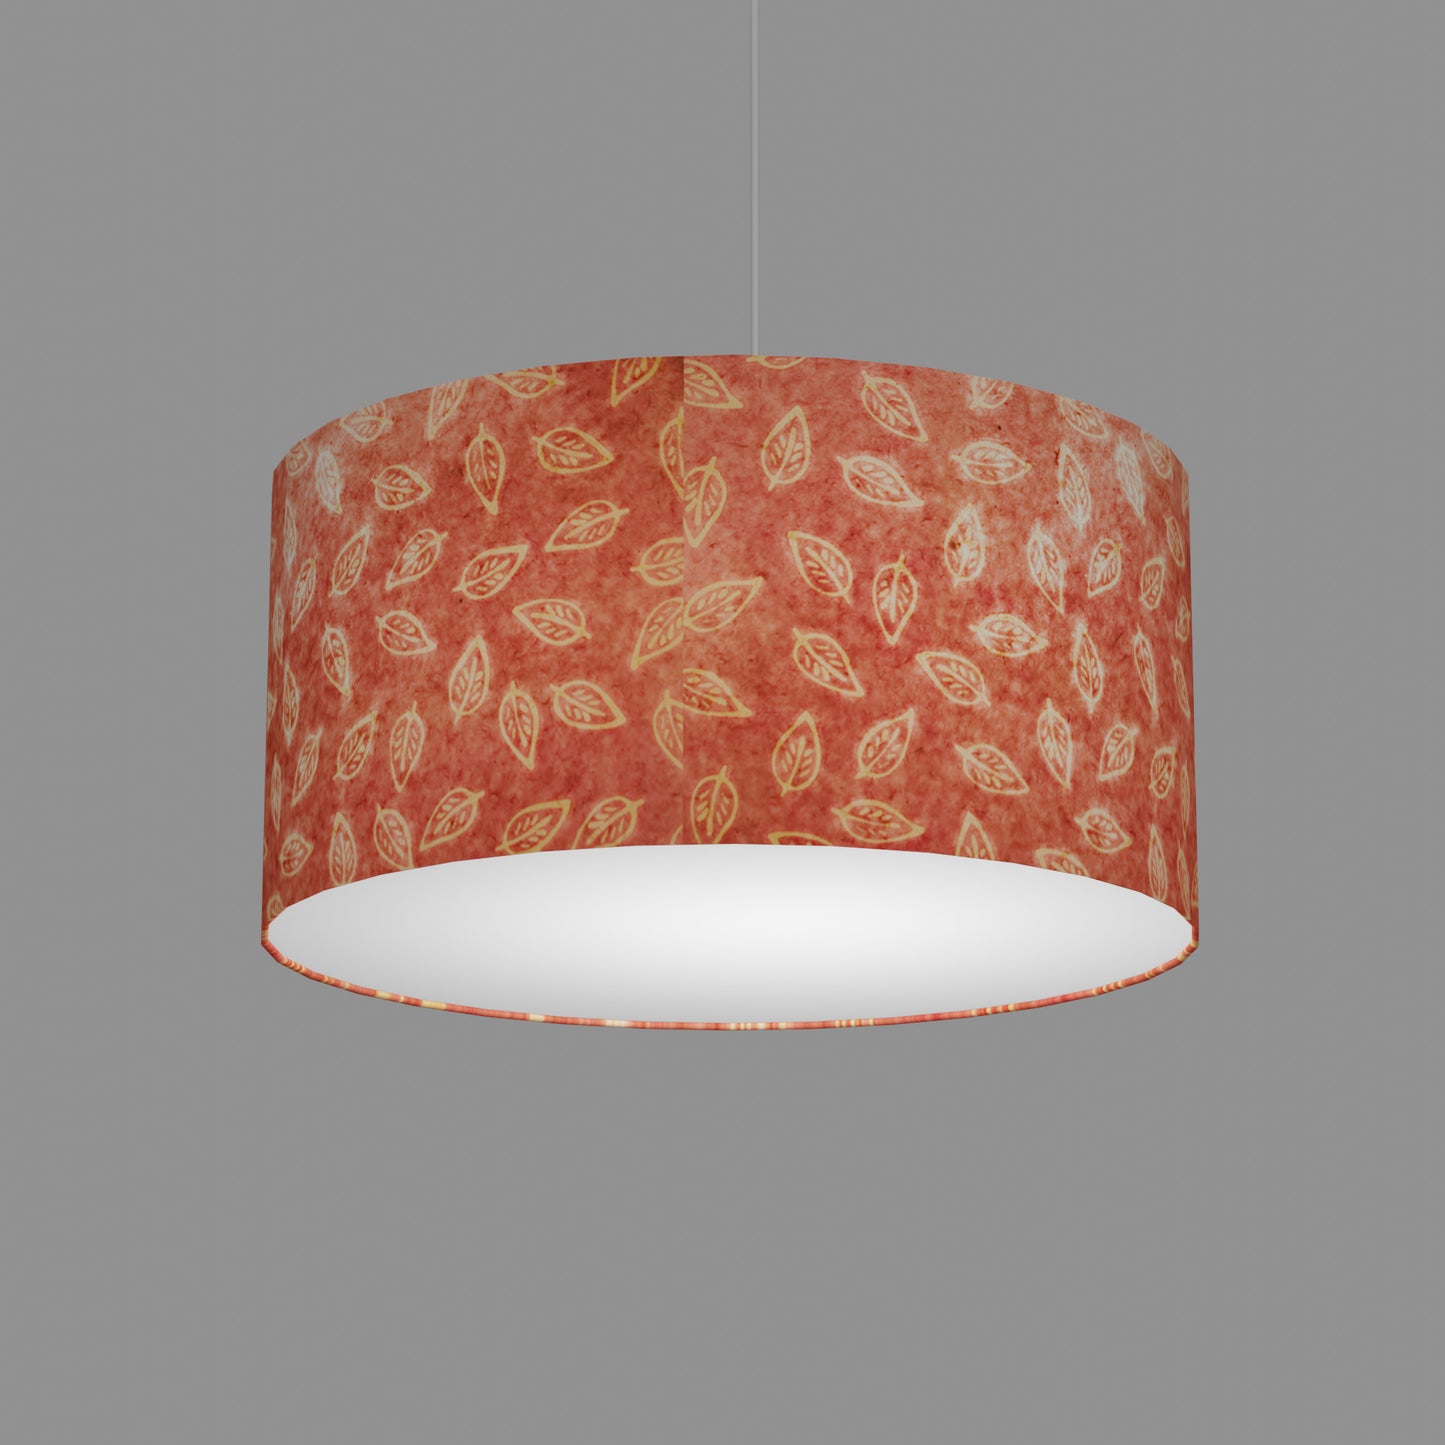 Drum Lamp Shade - P67 - Batik Leaf on Pink, 50cm(d) x 25cm(h)